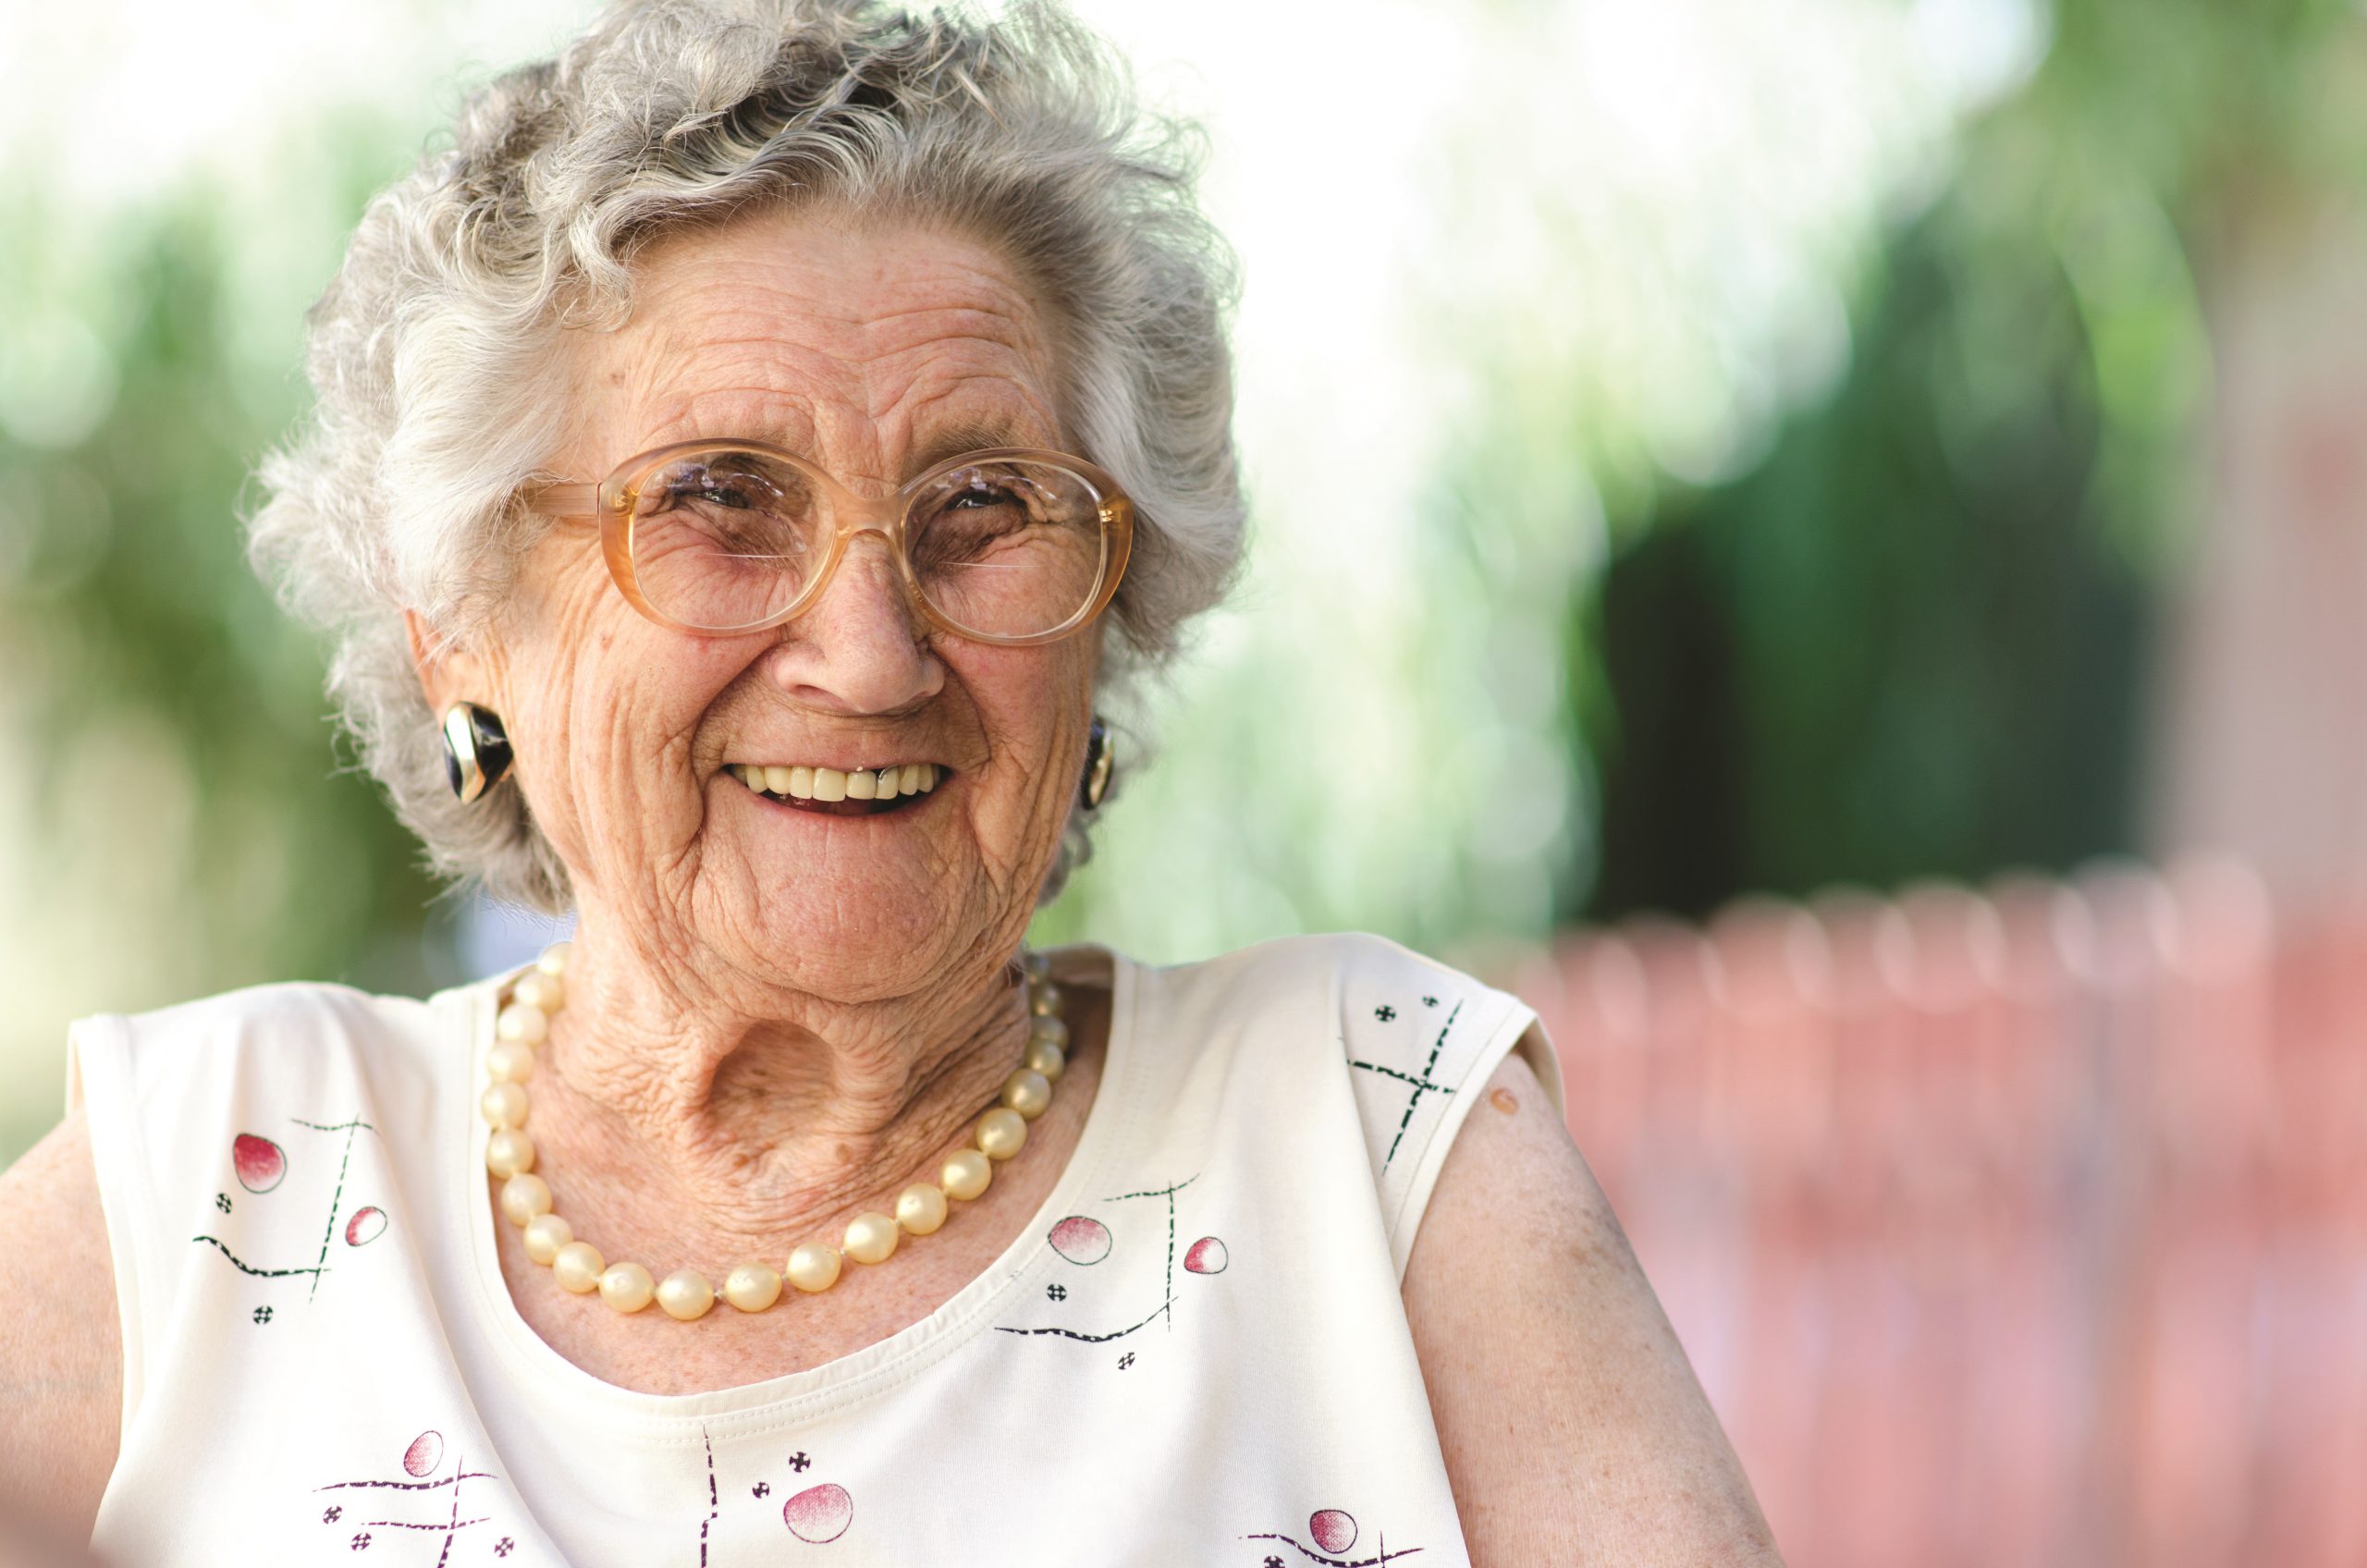 https://www.australianageingagenda.com.au/wp-content/uploads/2019/01/Older-lady-happy-smiling-wellness1-scaled.jpg